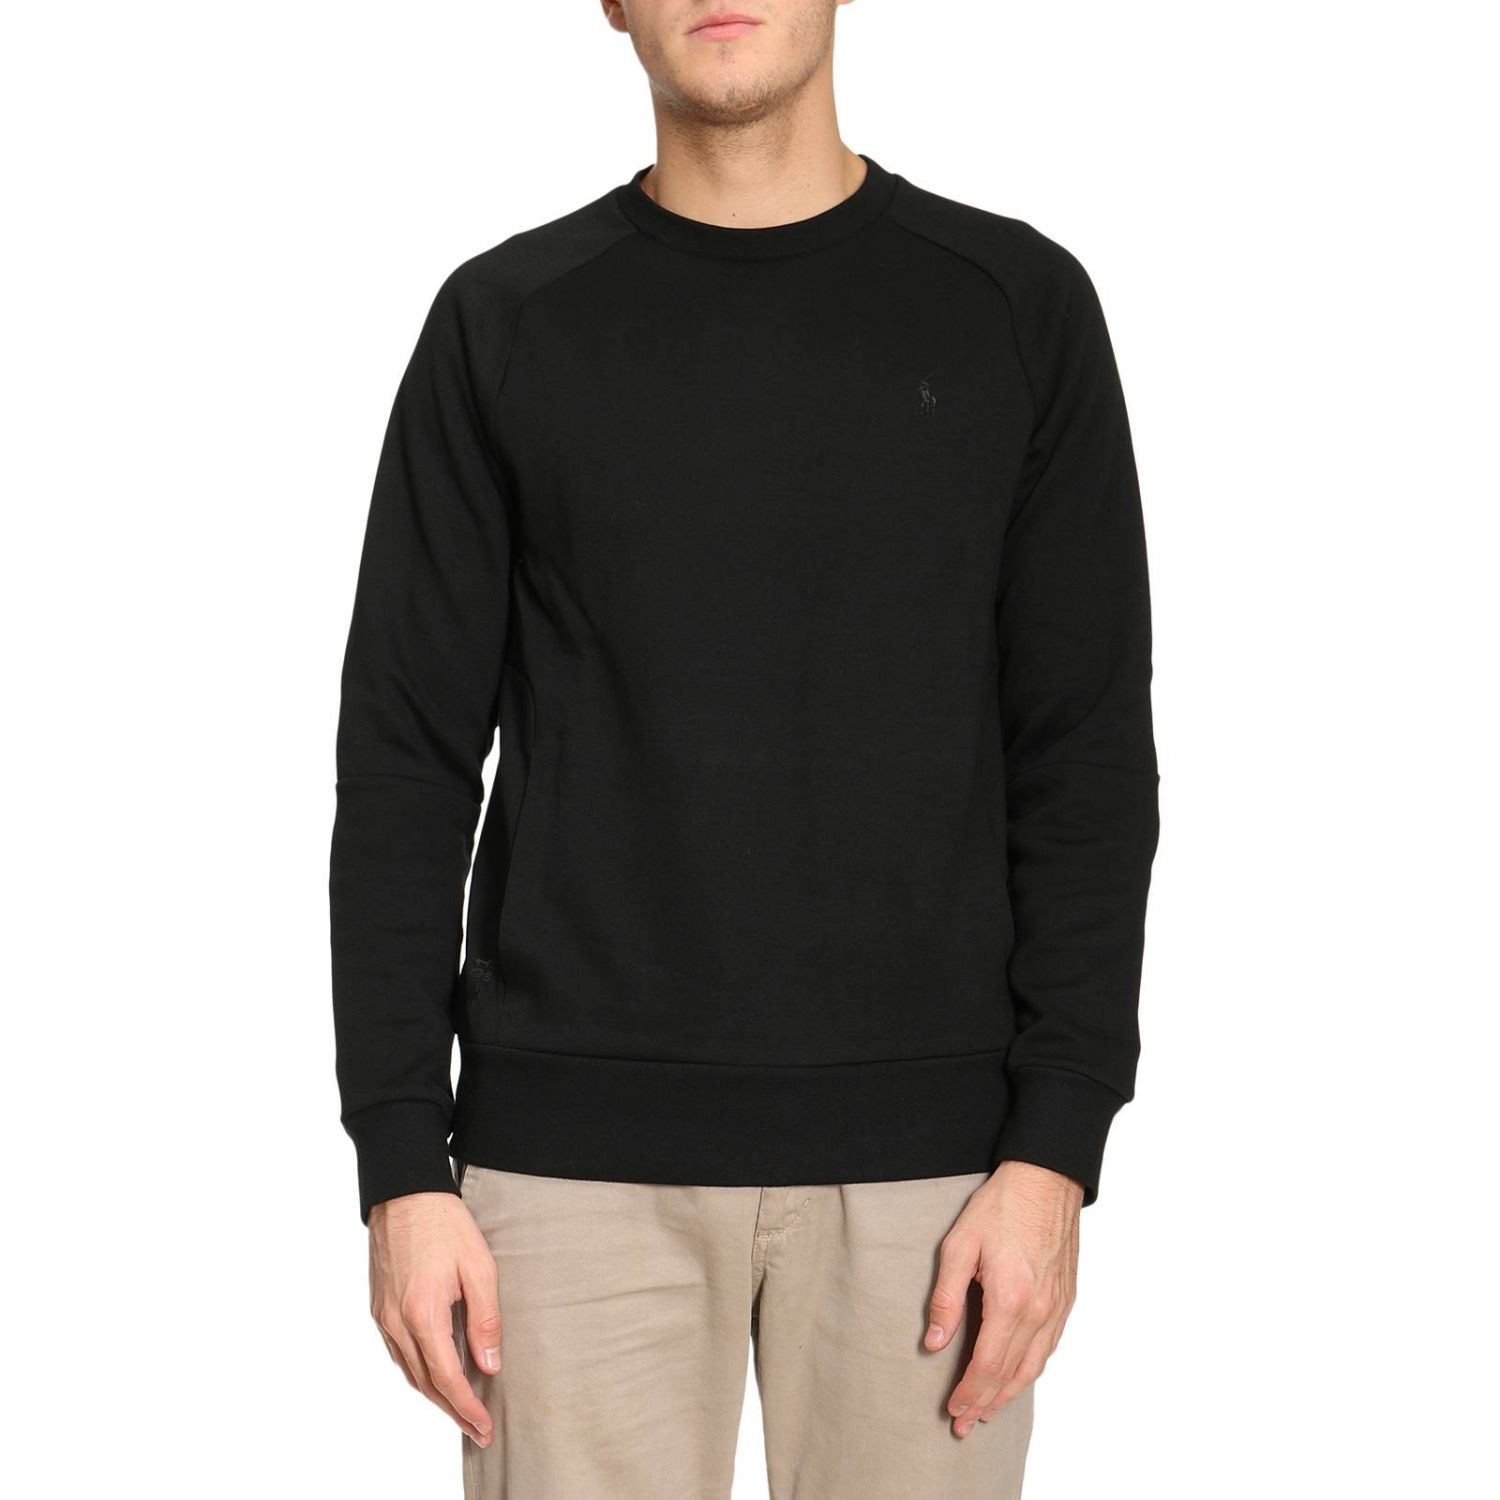 Polo Ralph Lauren Outlet: Sweater men | Sweatshirt Polo Ralph Lauren ...